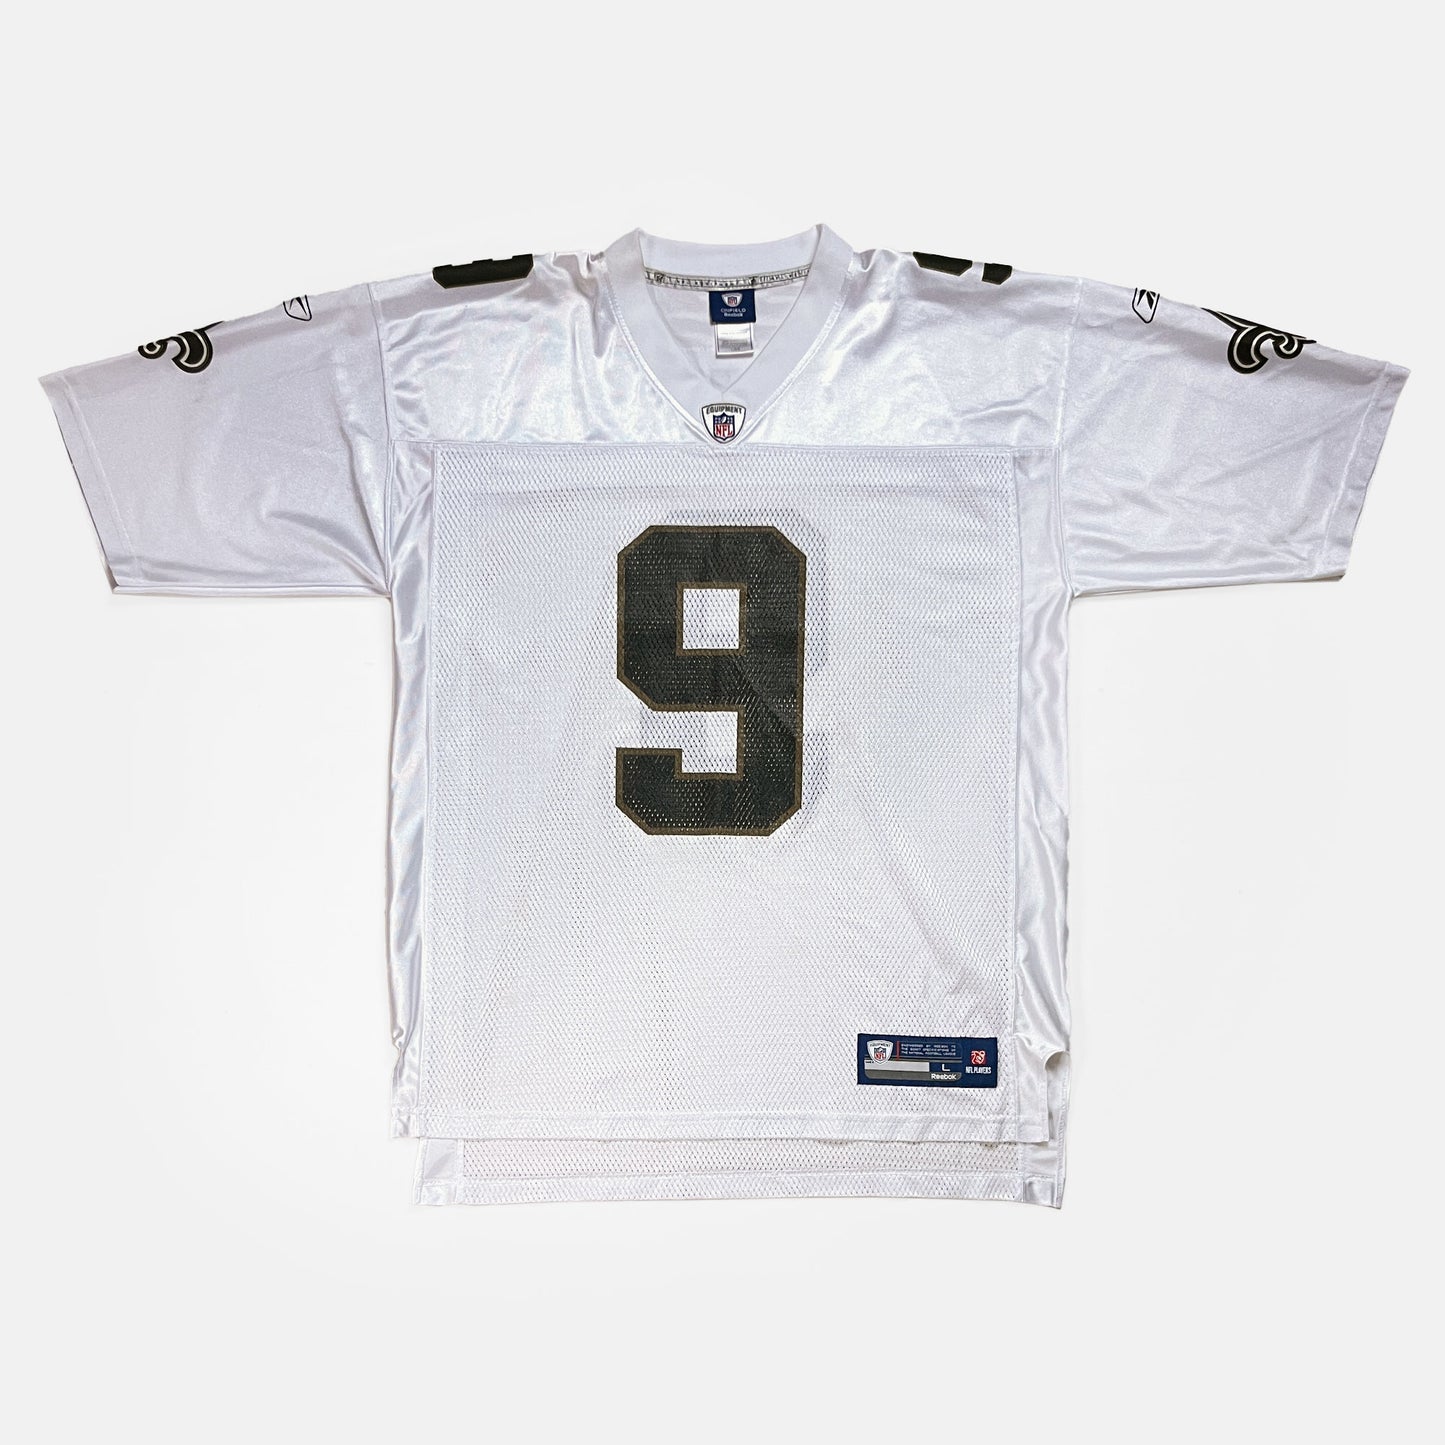 New Orleans Saints - Drew Brees - Größe L - Reebok - NFL Trikot